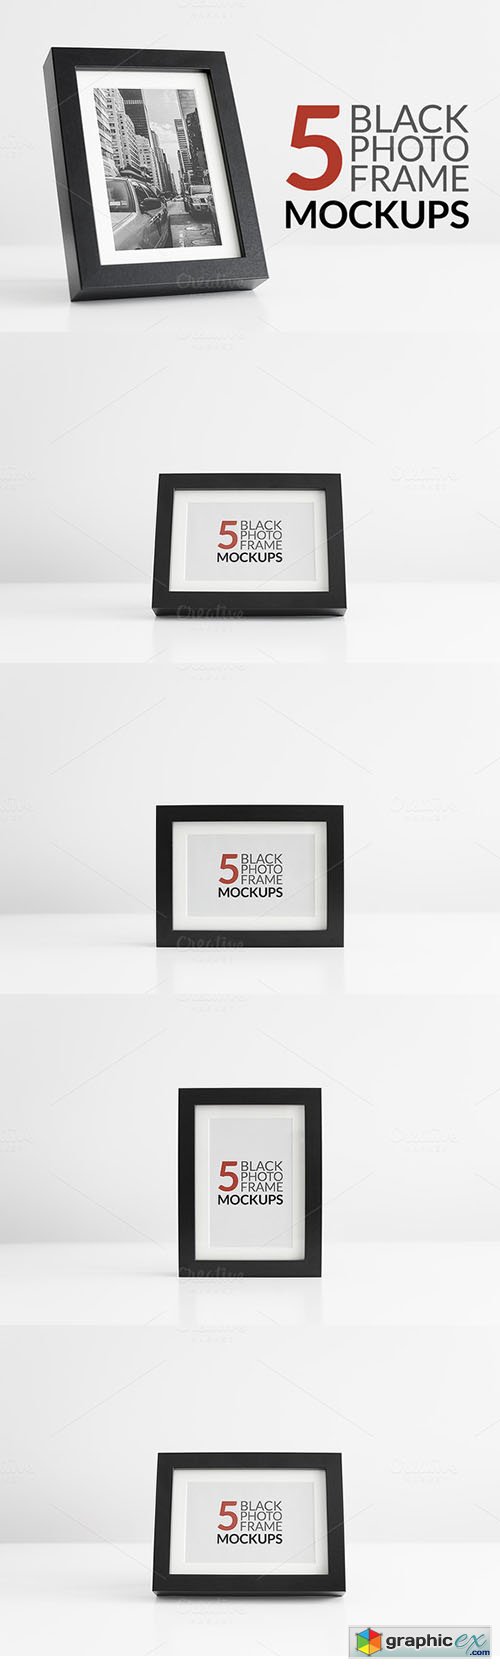 5 Black Photo Frame Mockups